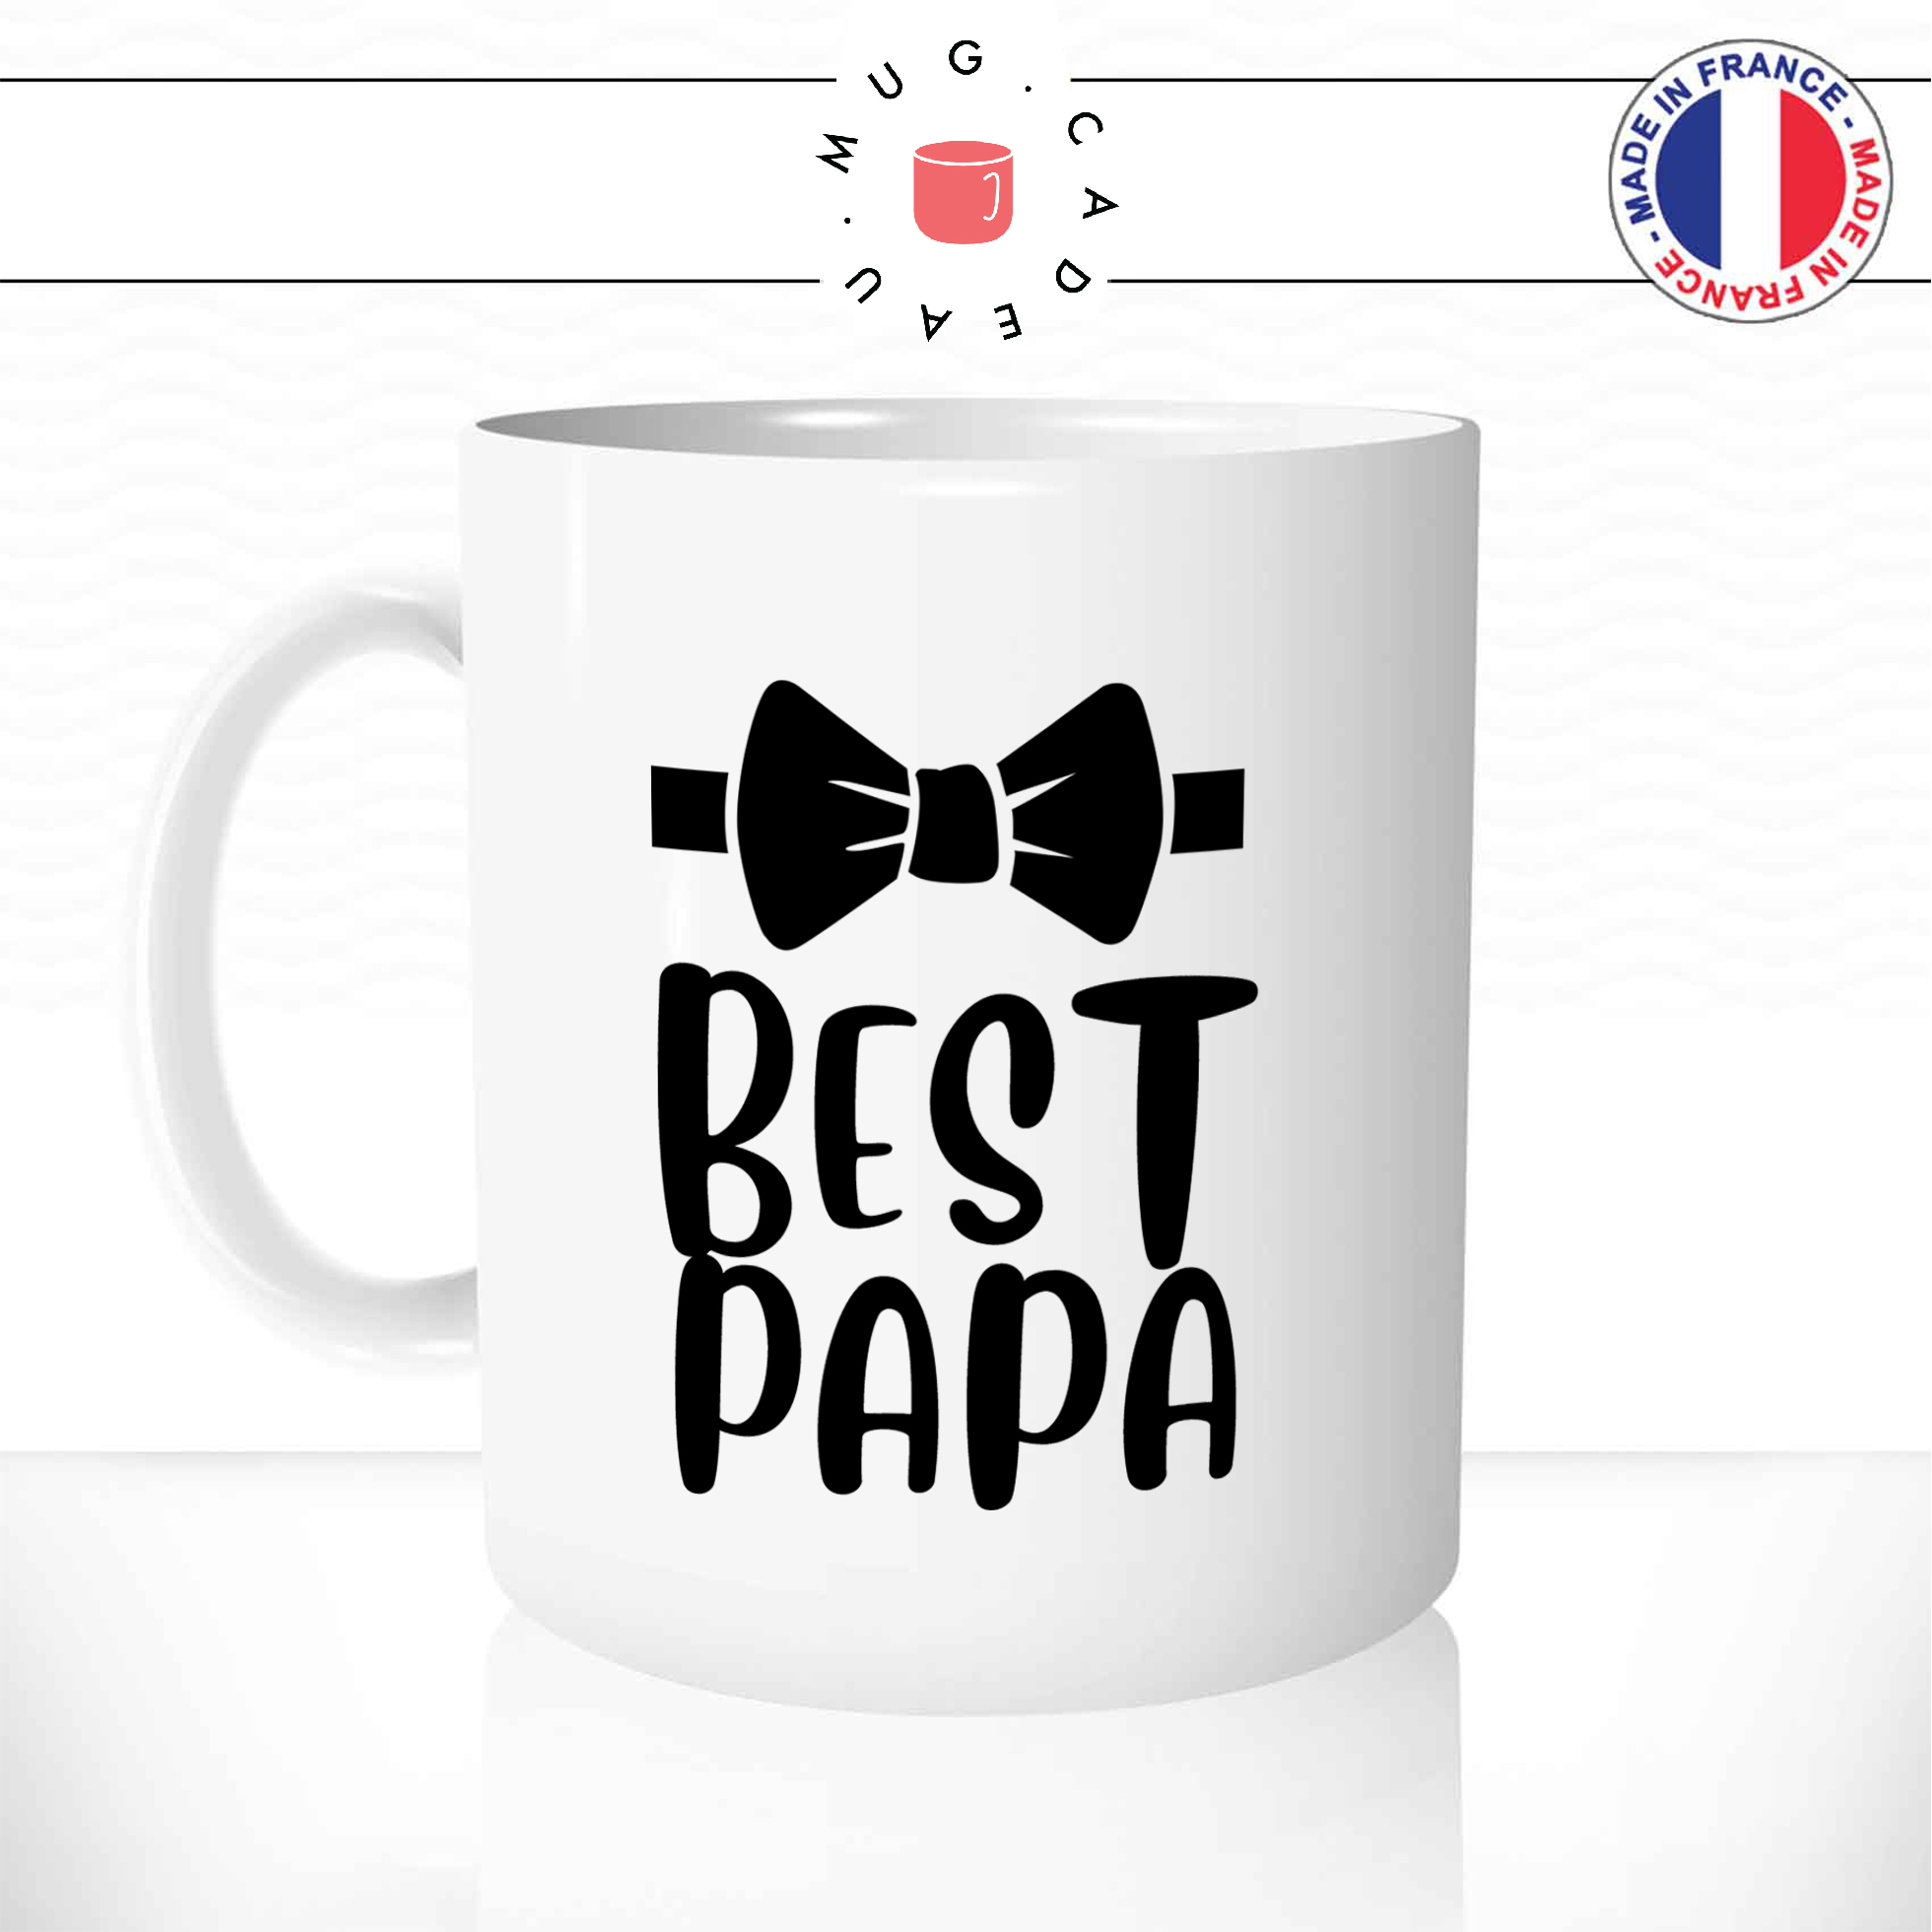 mug-tasse-ref10-fete-des-peres-best-papa-noeud-papillon-cafe-the-mugs-tasses-personnalise-anse-gauche